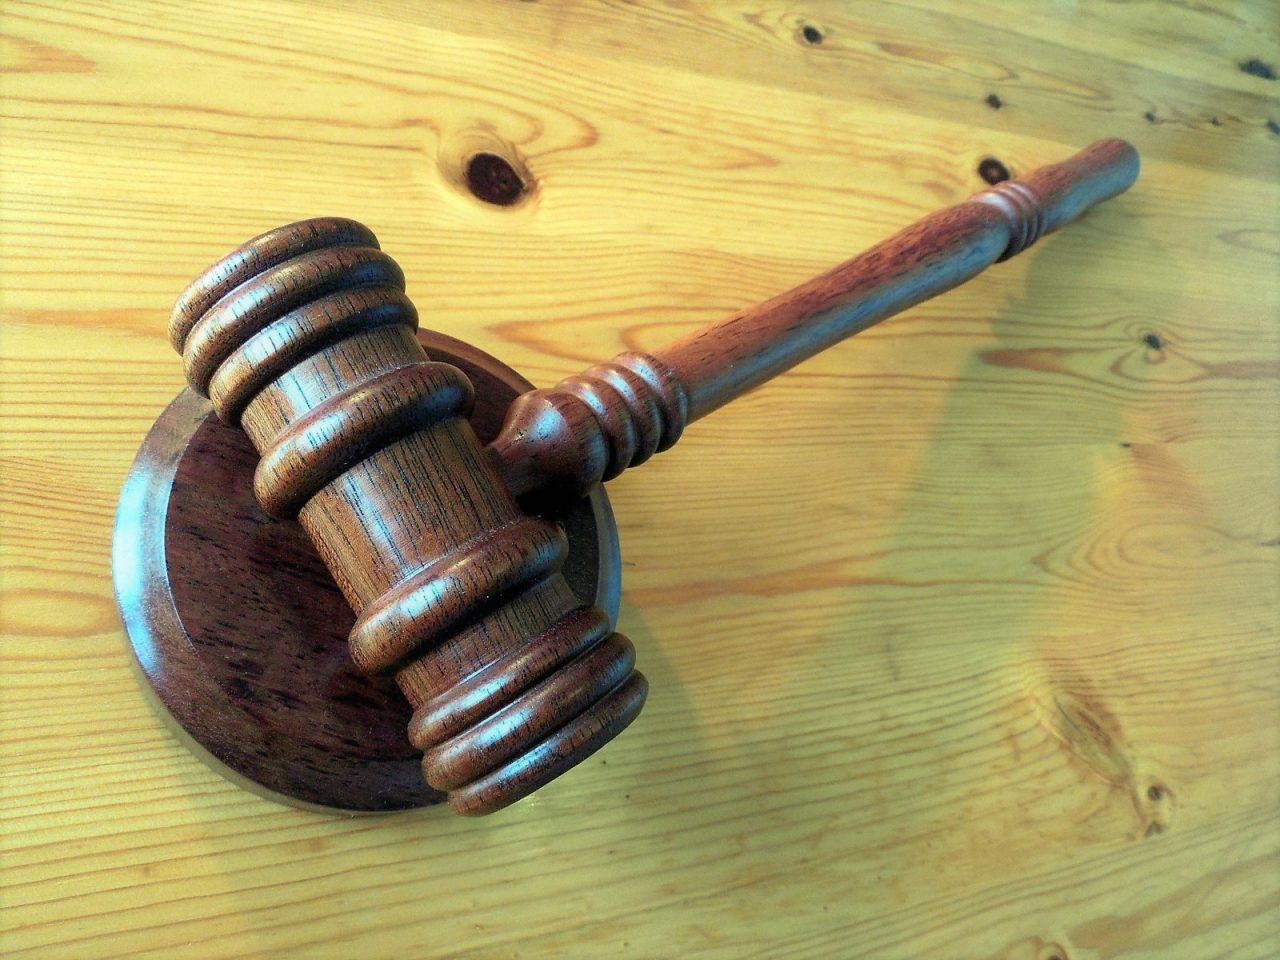 http://site73.myvosite.com/wp-content/uploads/2017/09/justice-court-hammer-auction-law-auctioneer-judge.jpg